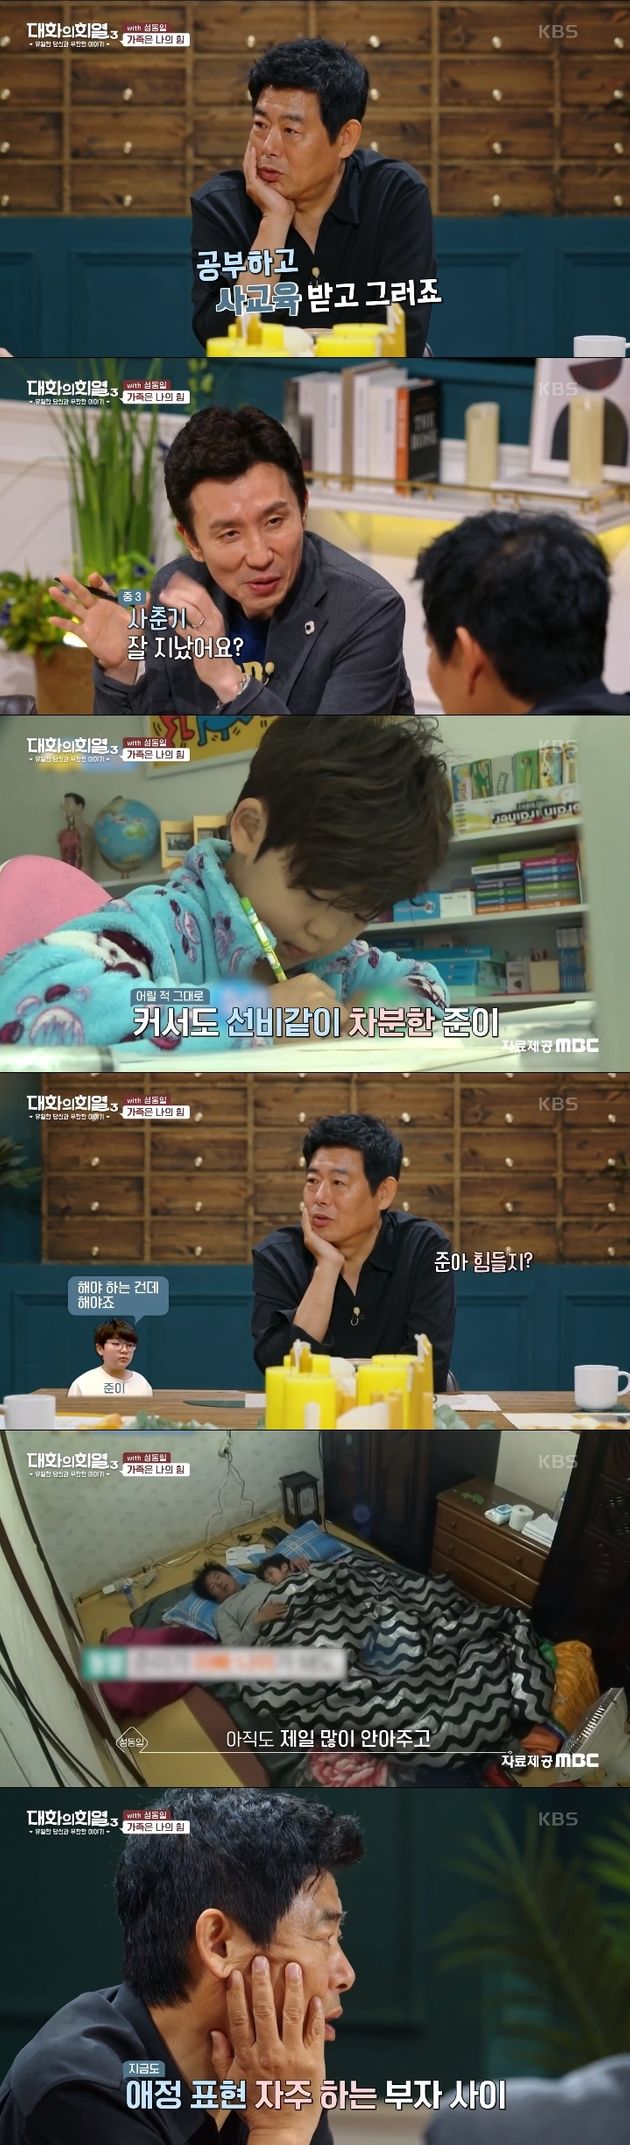 KBS2 '대화의 희열' 시즌3